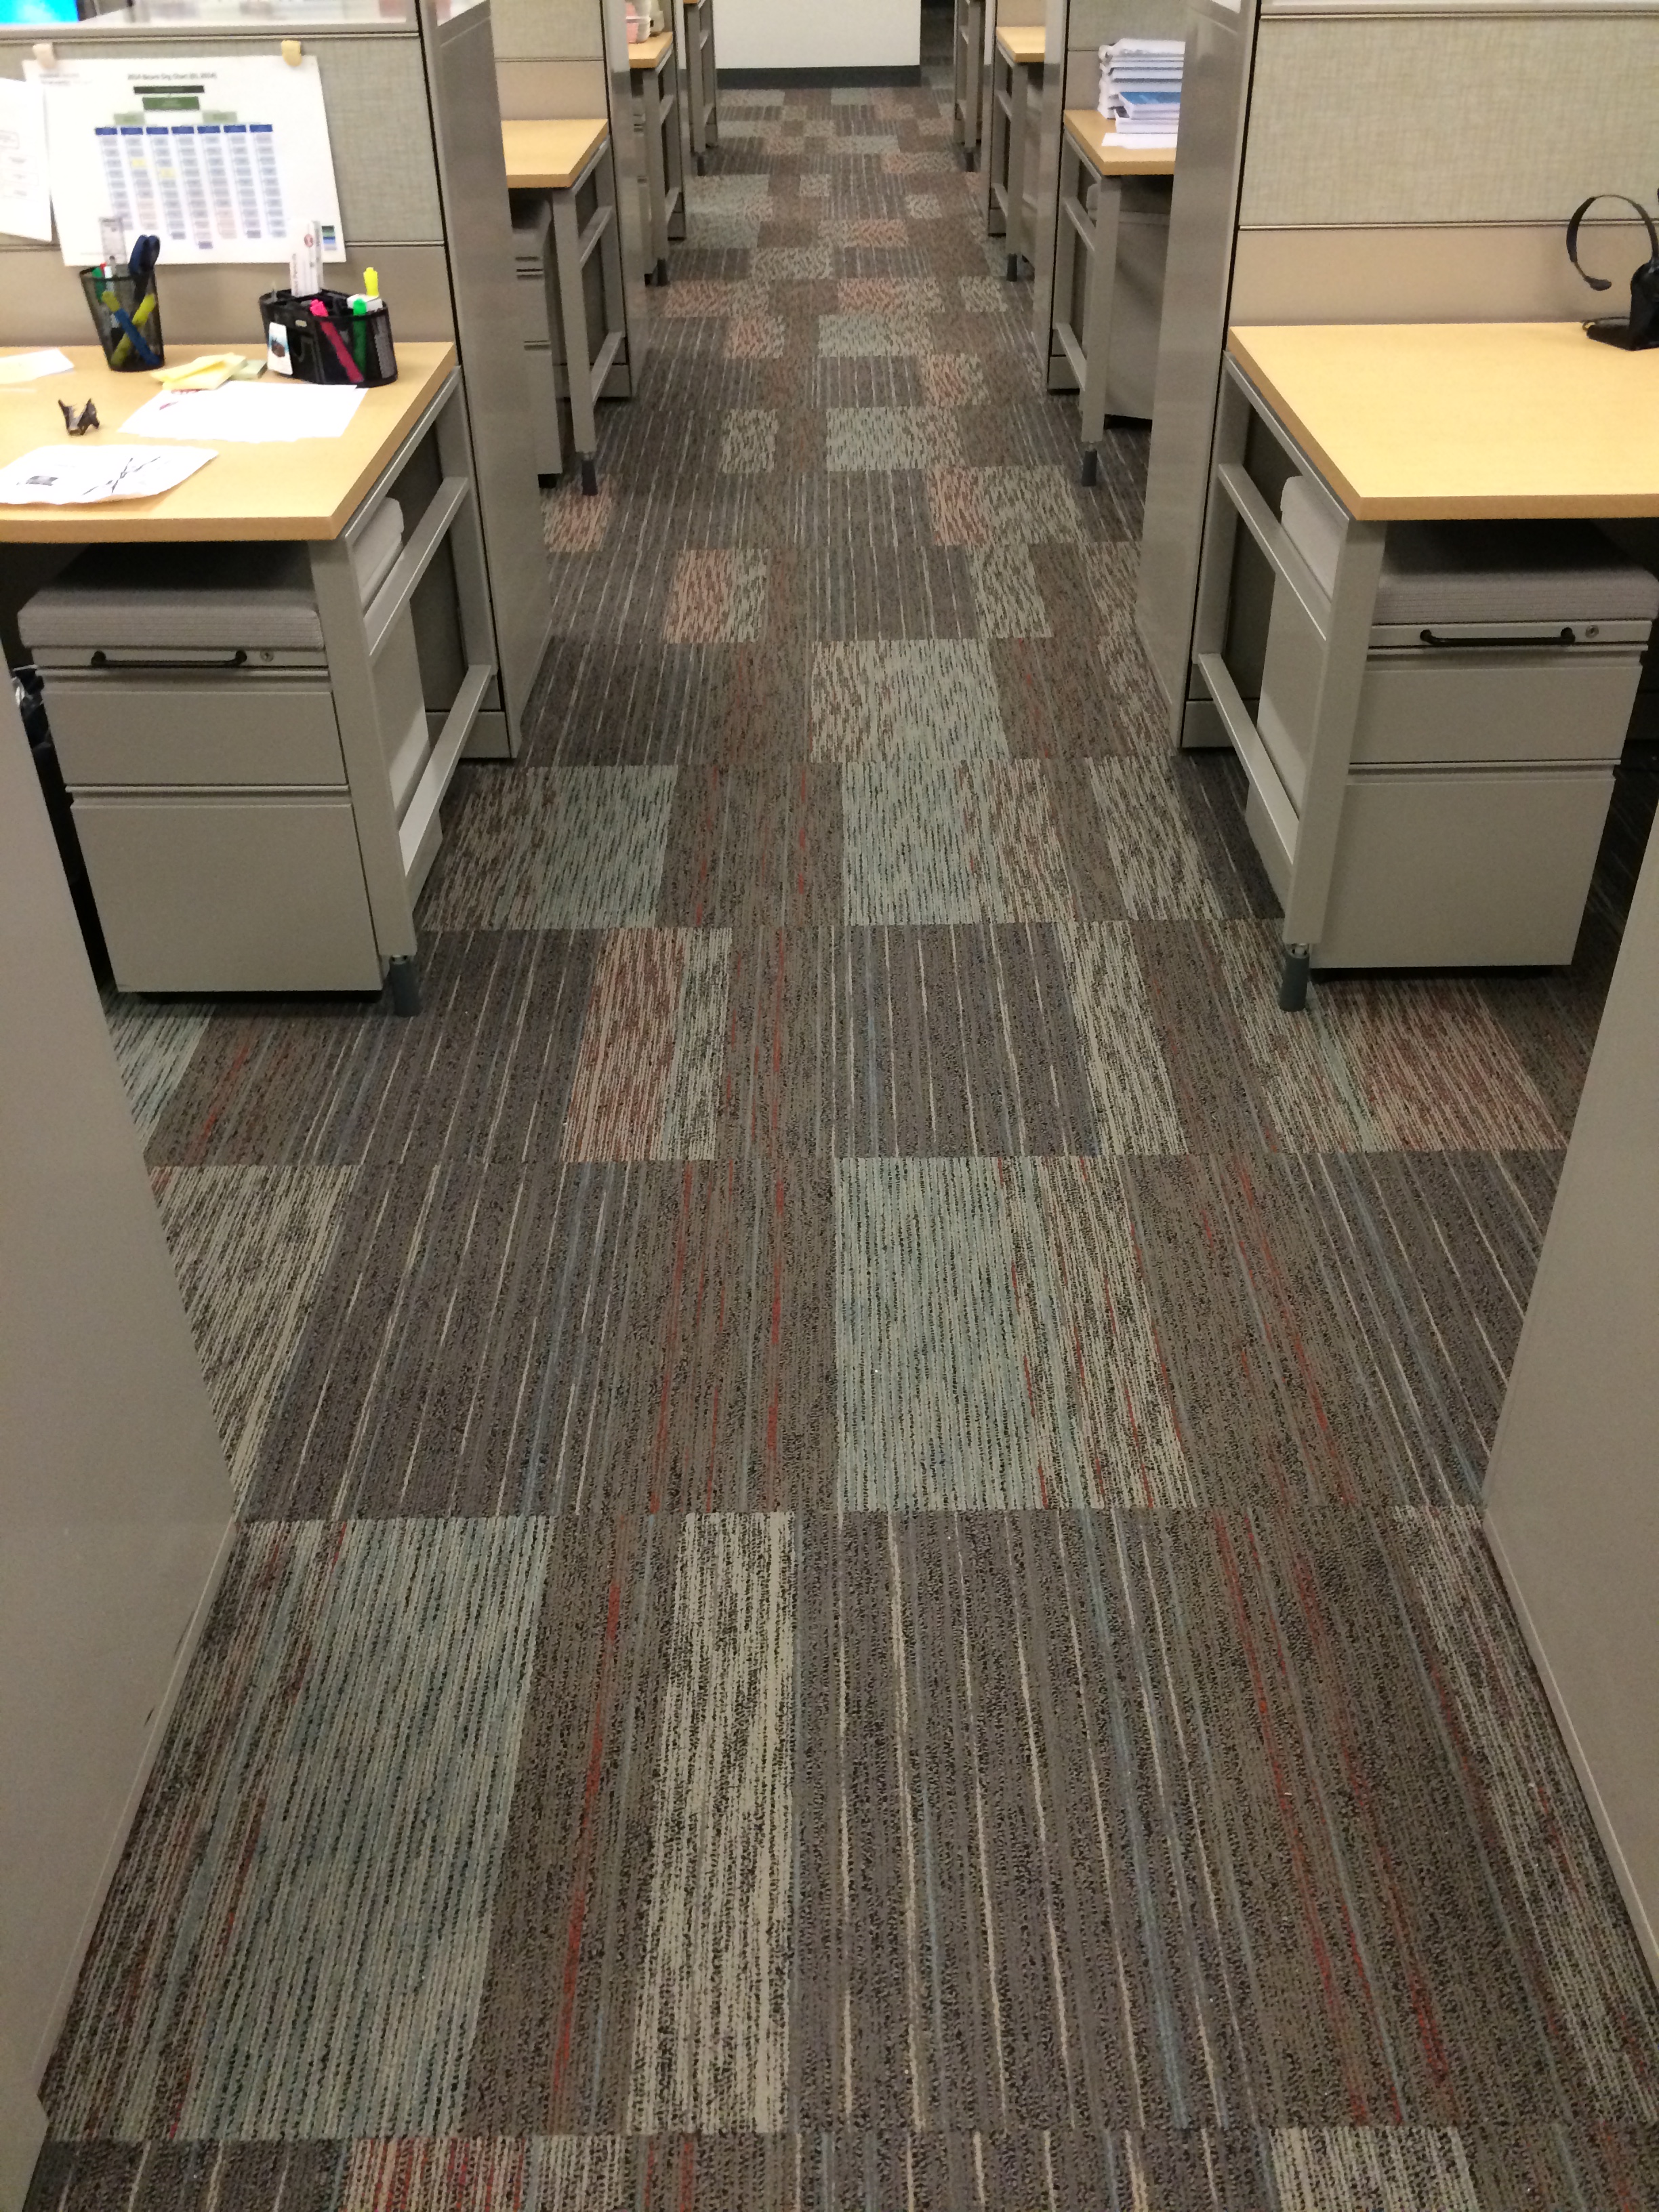 Carpet tiles in a brickwork pattern in an office building